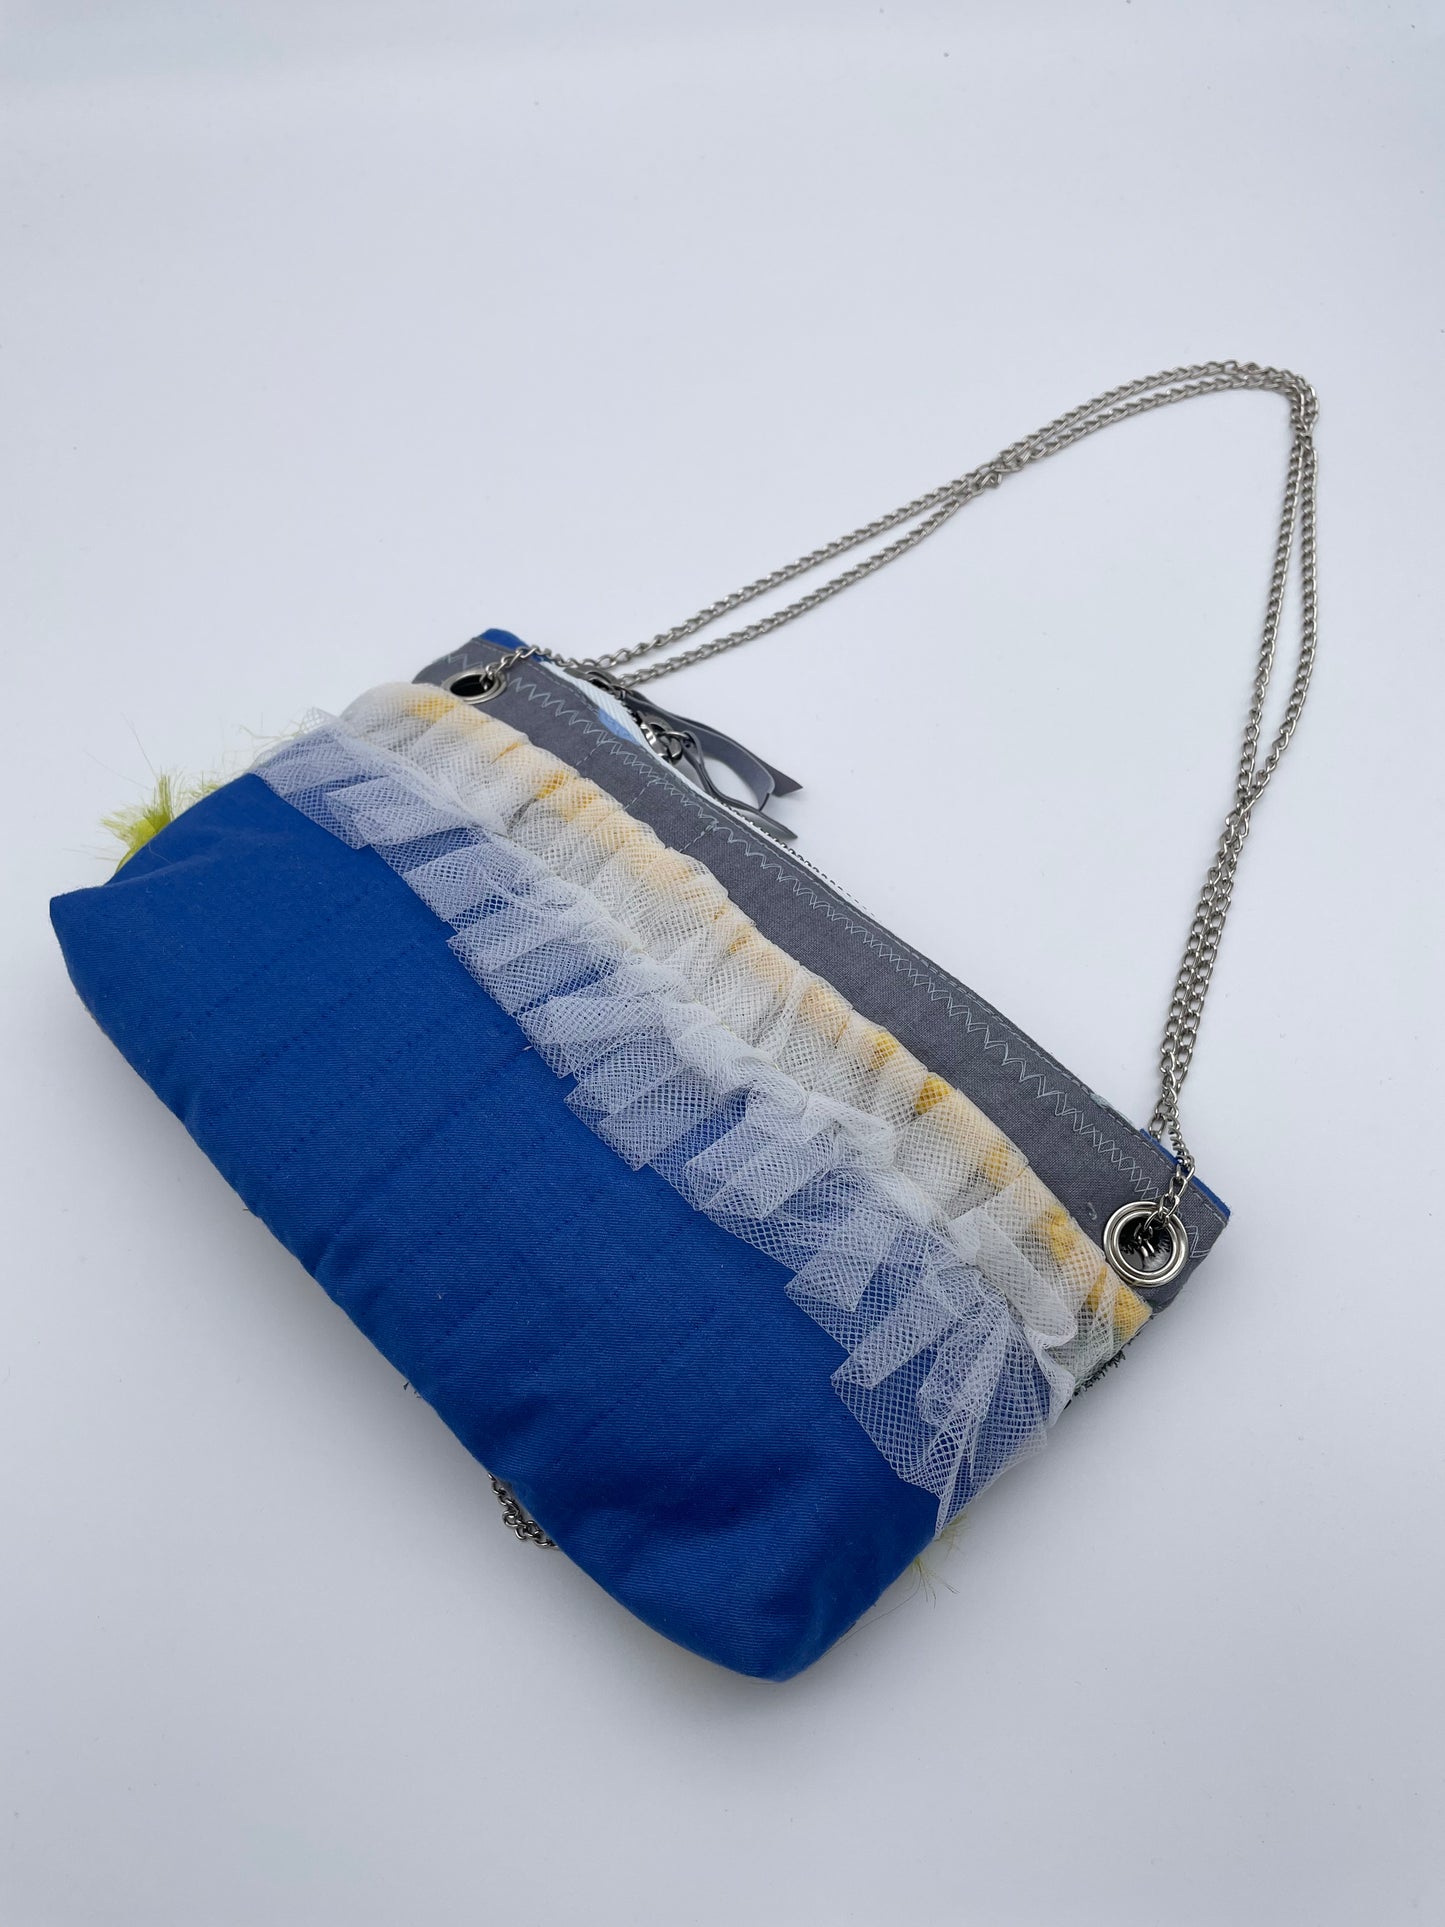 upcycled mini bag upcycling bag zerowaste handmade discarded fabric leftover patchwork reworked bag blue white tulle